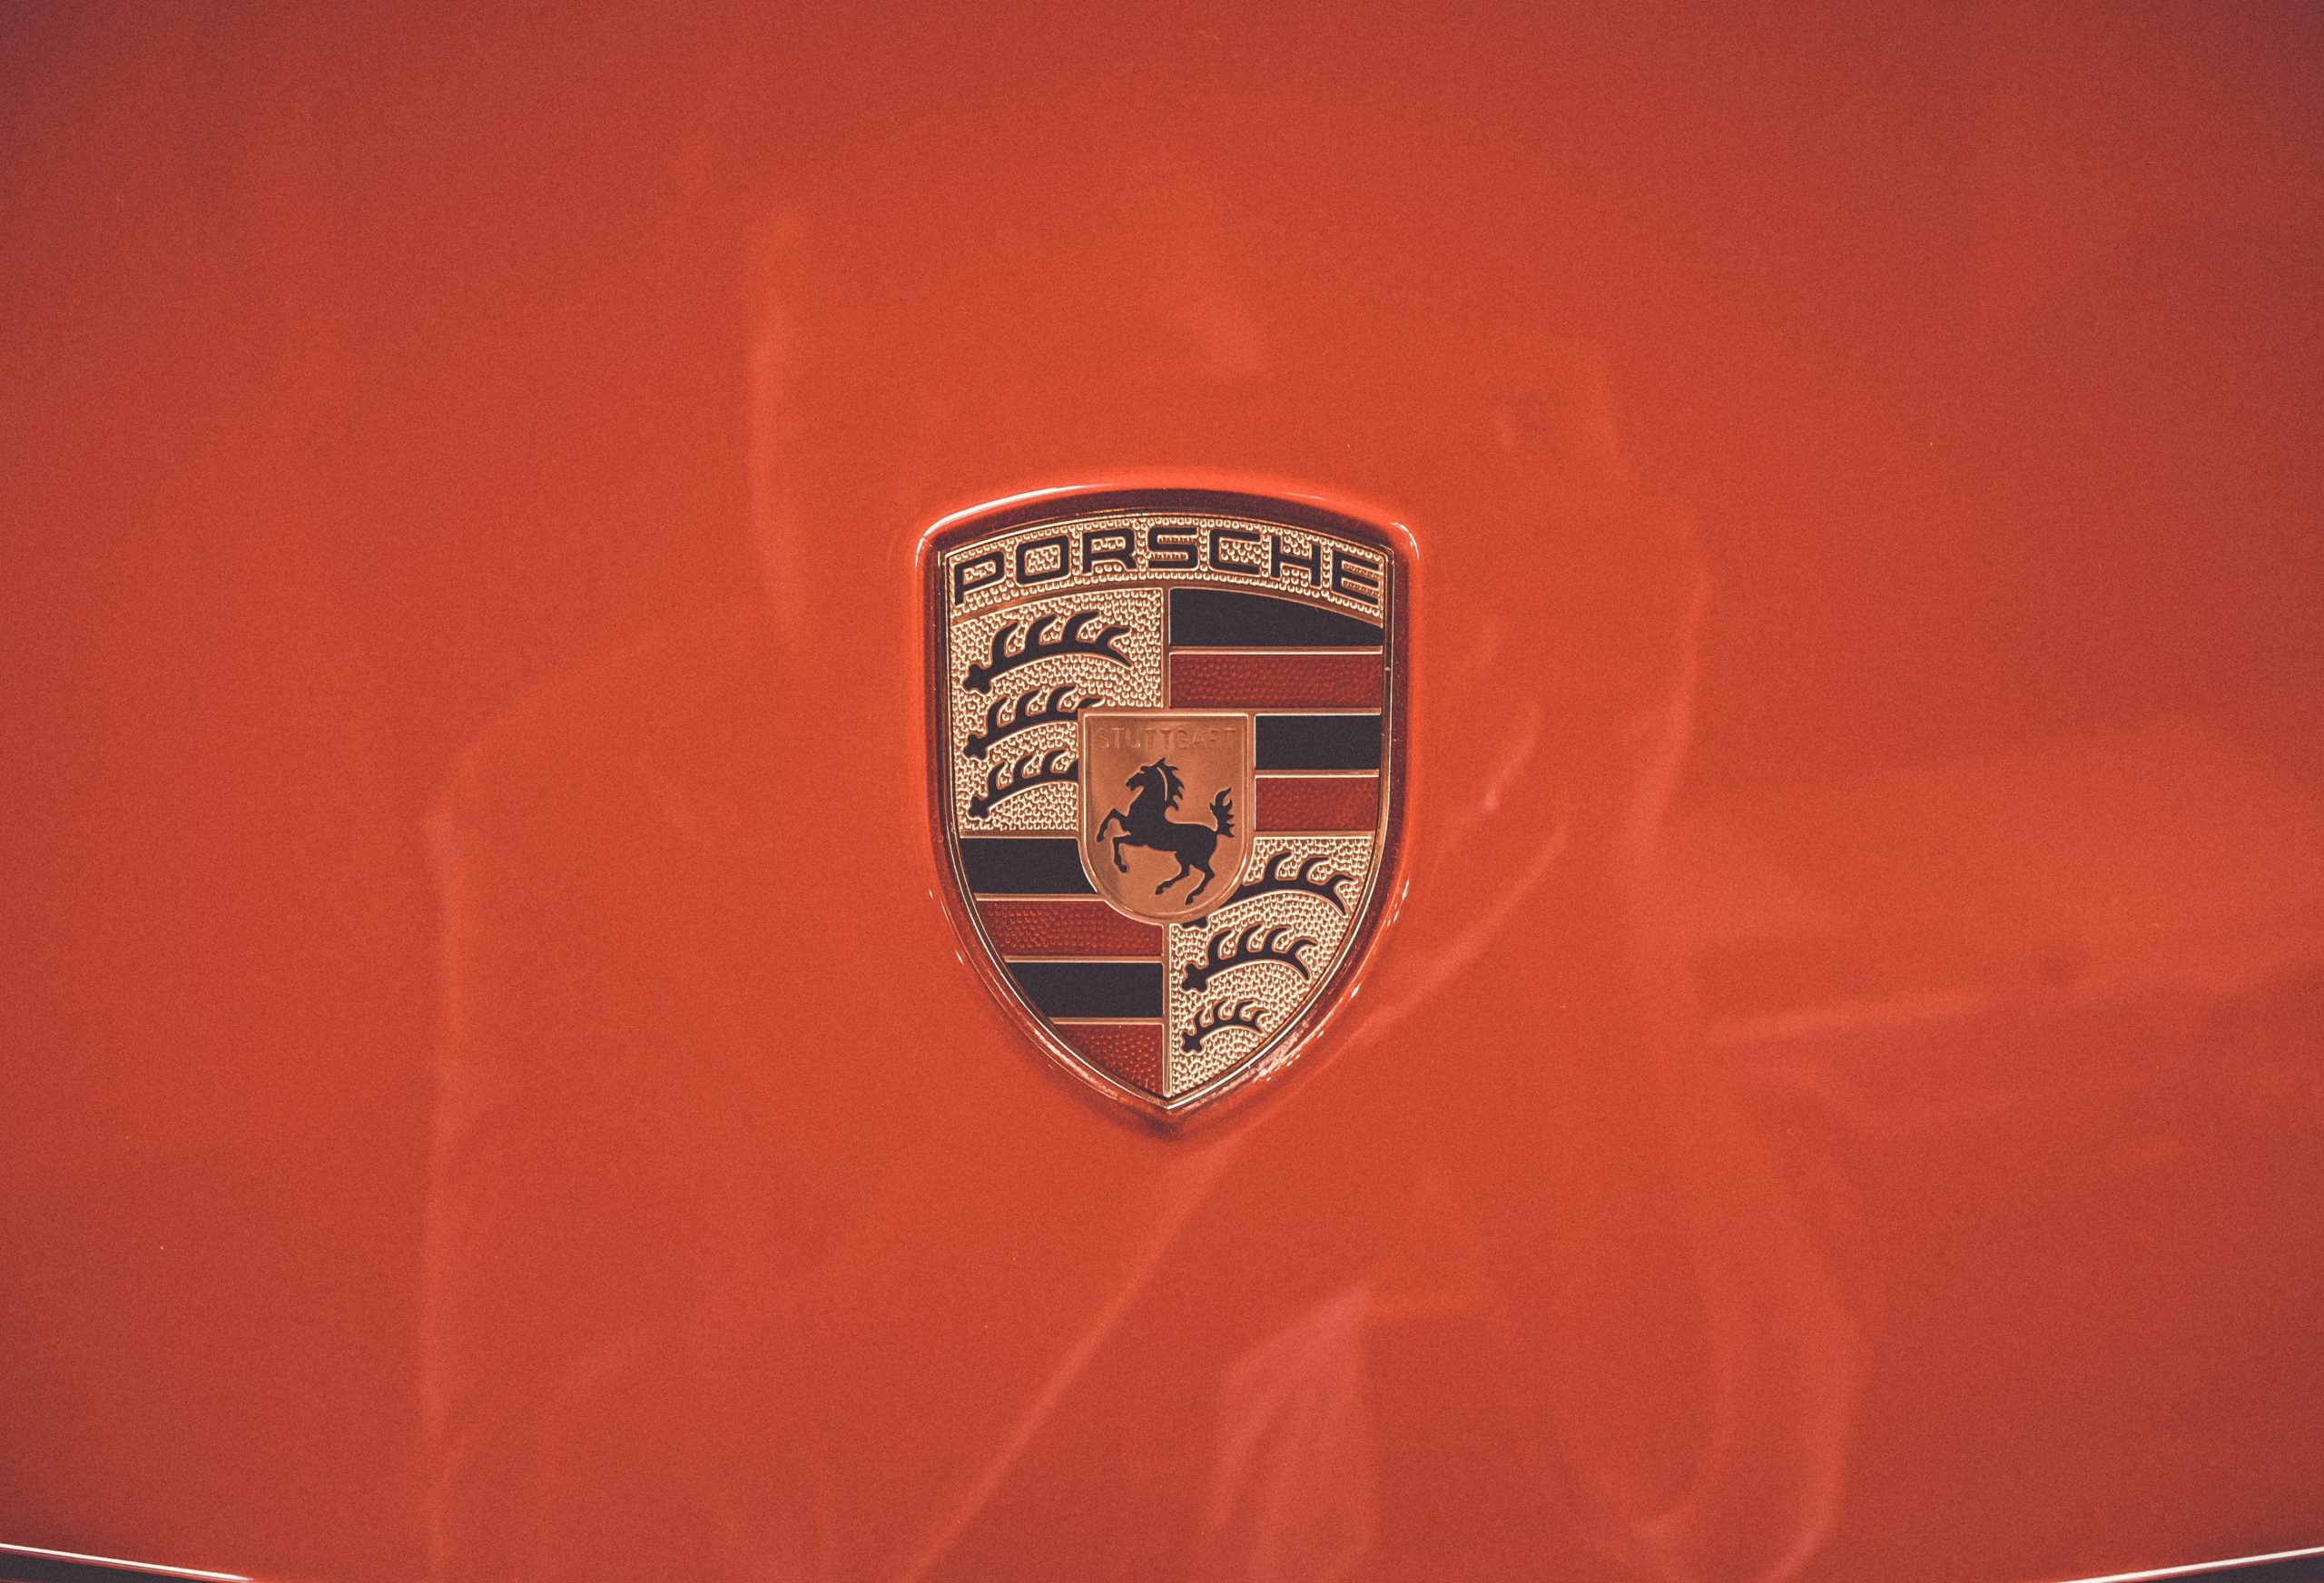 Partenariat Singer et Porsche